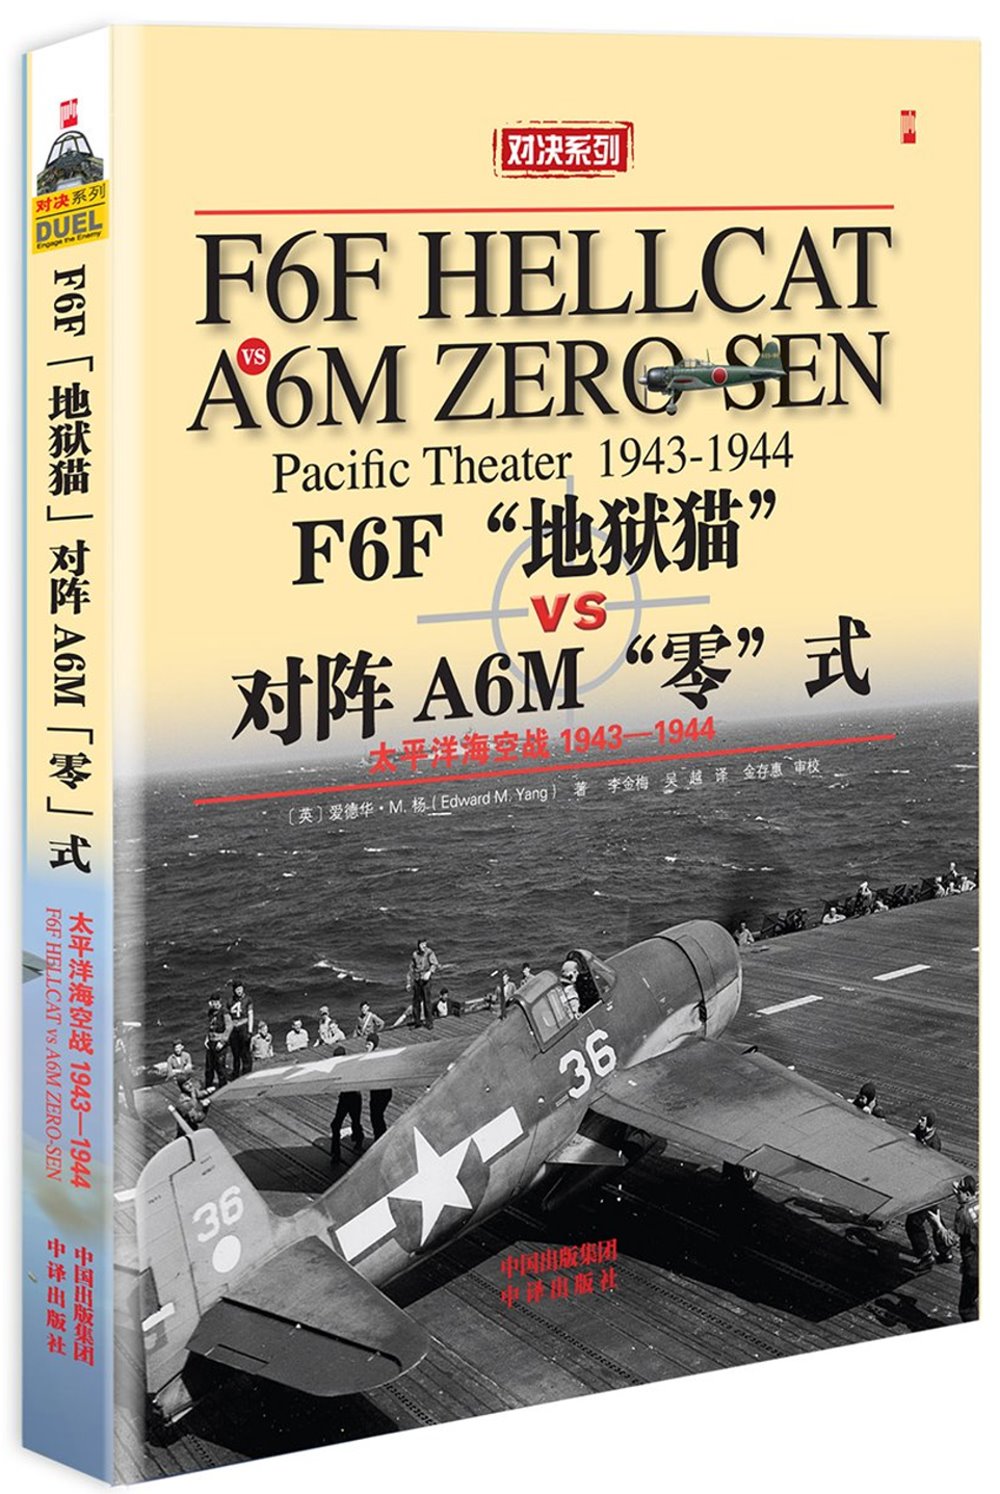 F6F「地獄貓」戰斗機VS A6M零式戰斗機:太平洋海空大戰1943-1944年